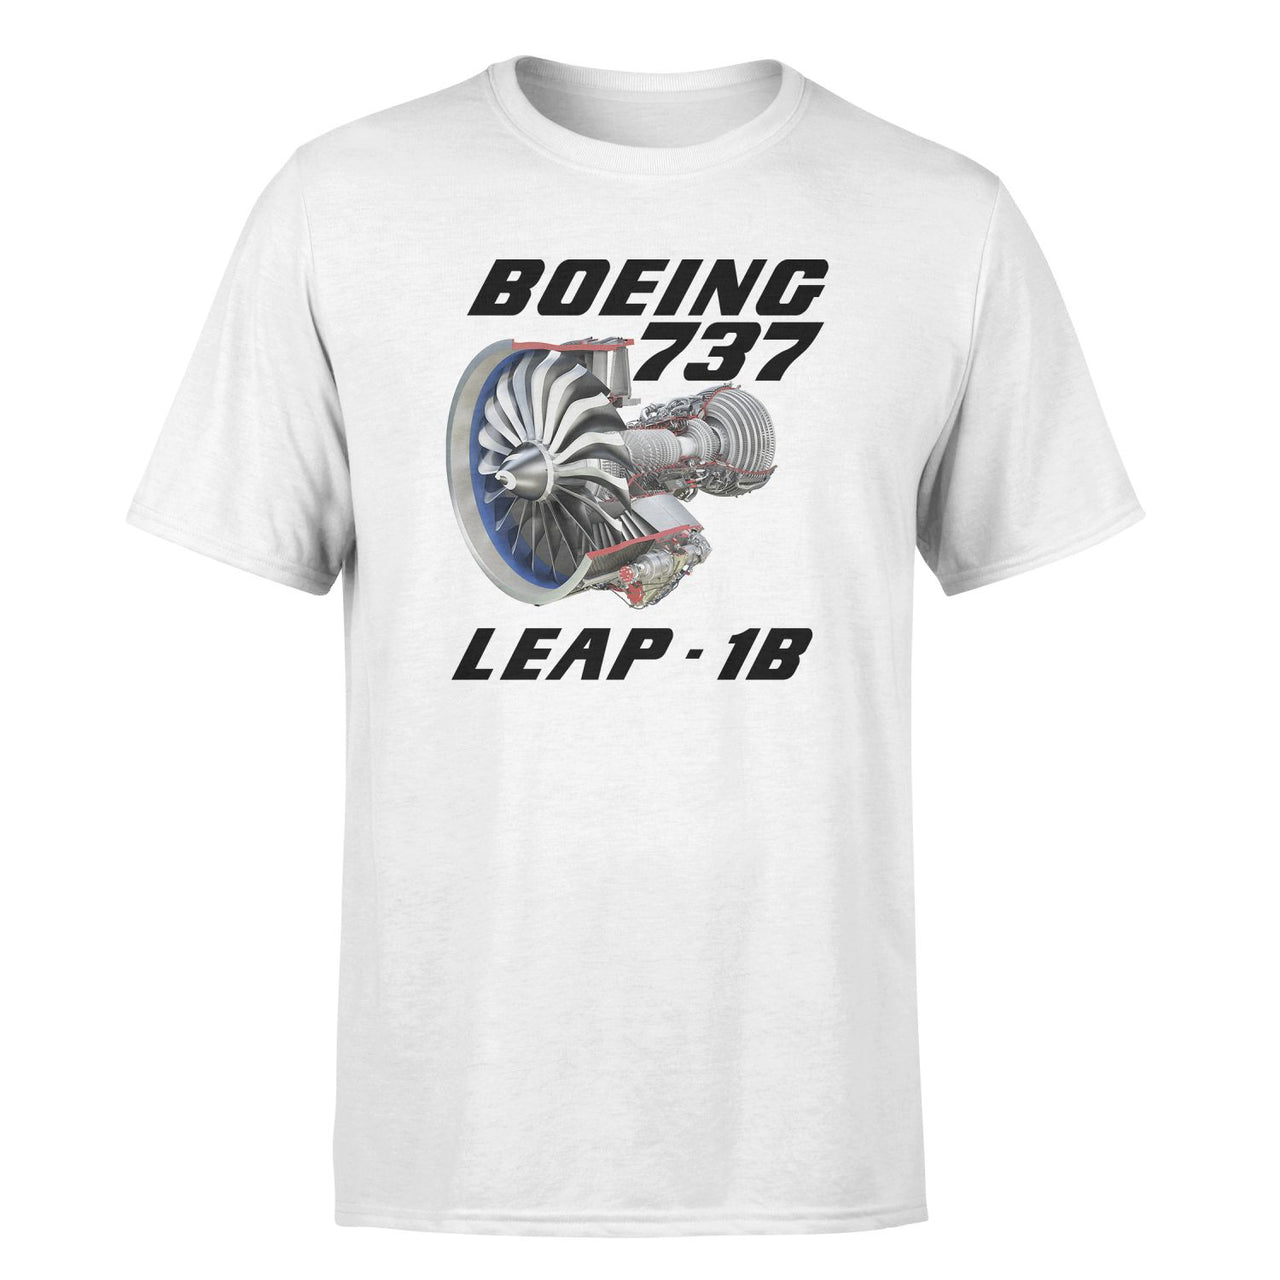 Boeing 737 & Leap 1B Designed T-Shirts